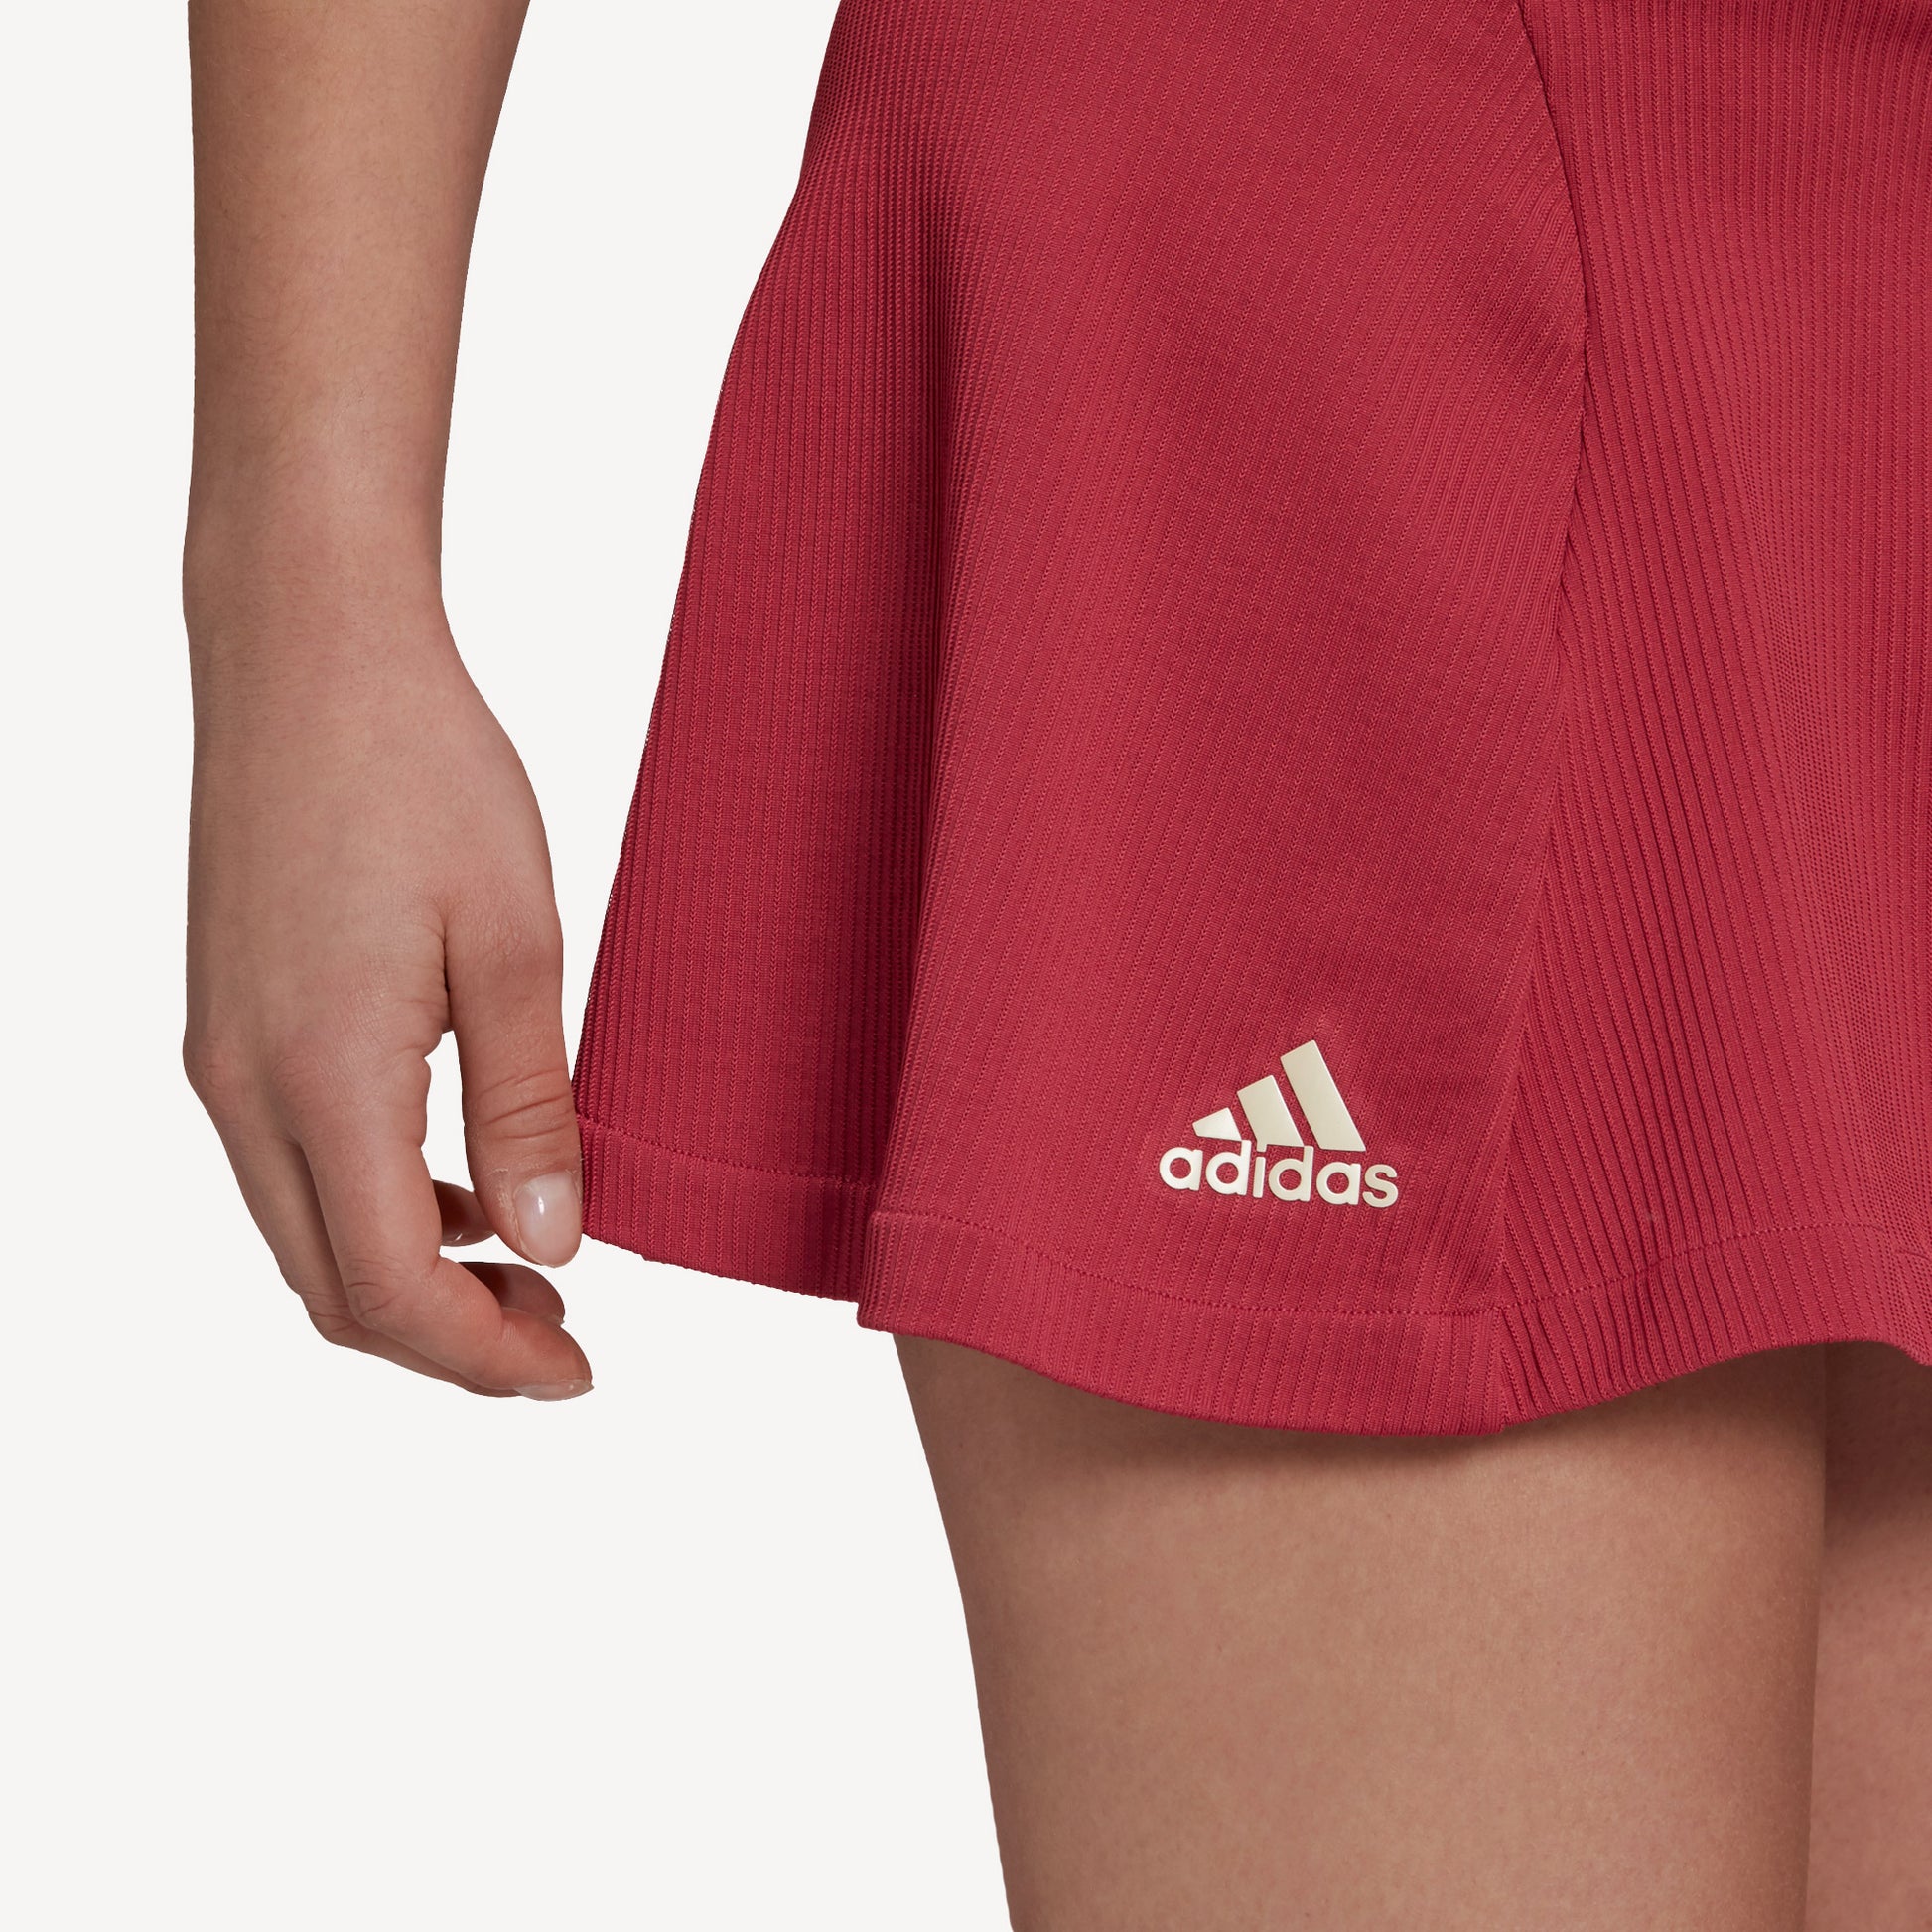 adidas Primeknit Primeblue Women's Tennis Skirt Pink (4)